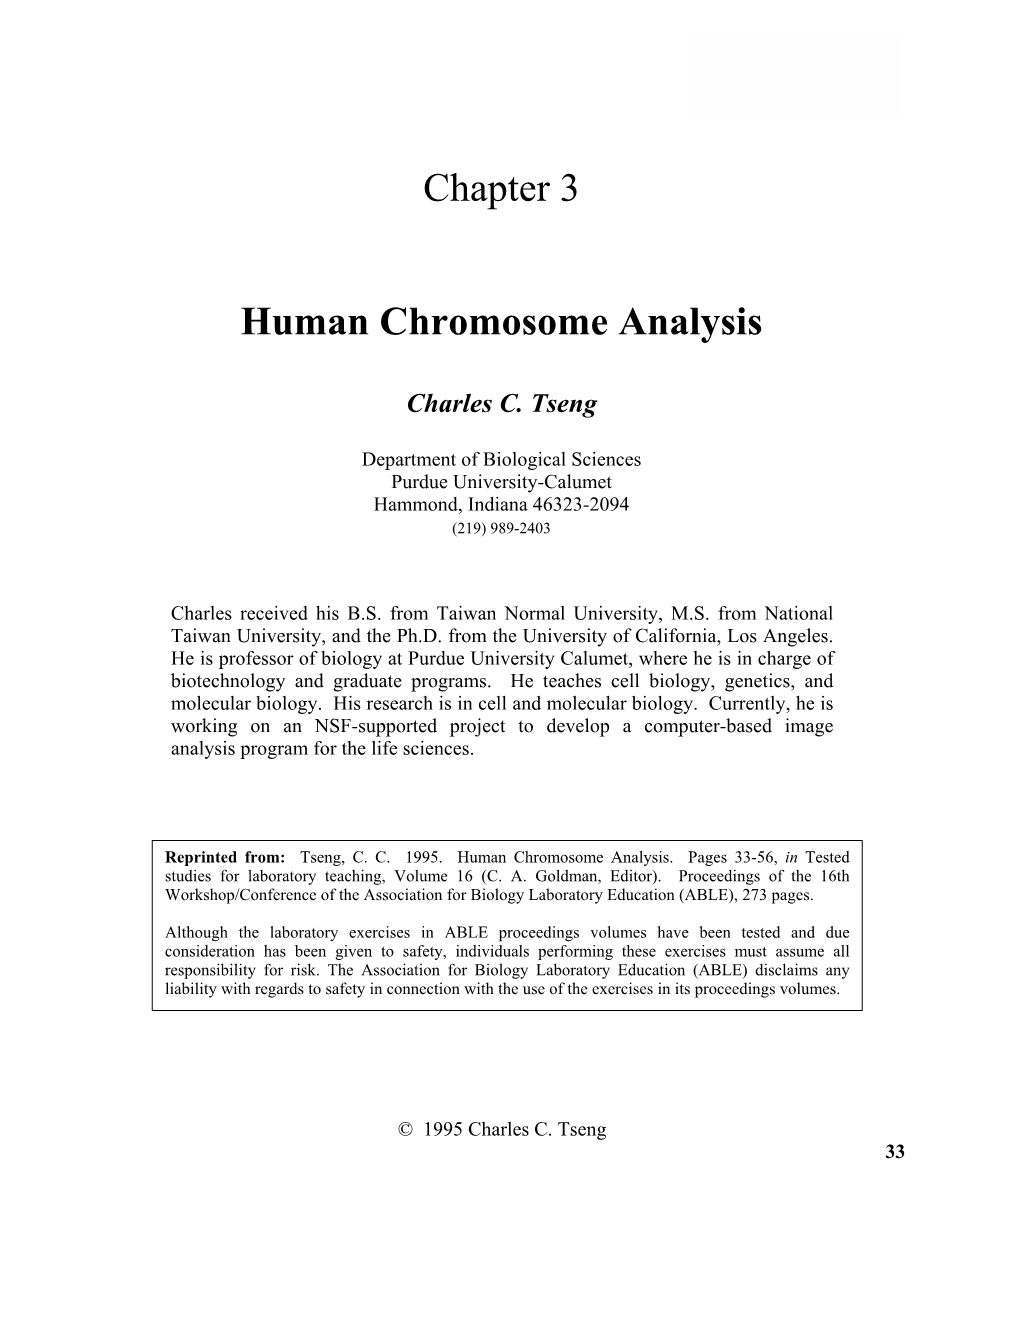 Chapter 3 Human Chromosome Analysis